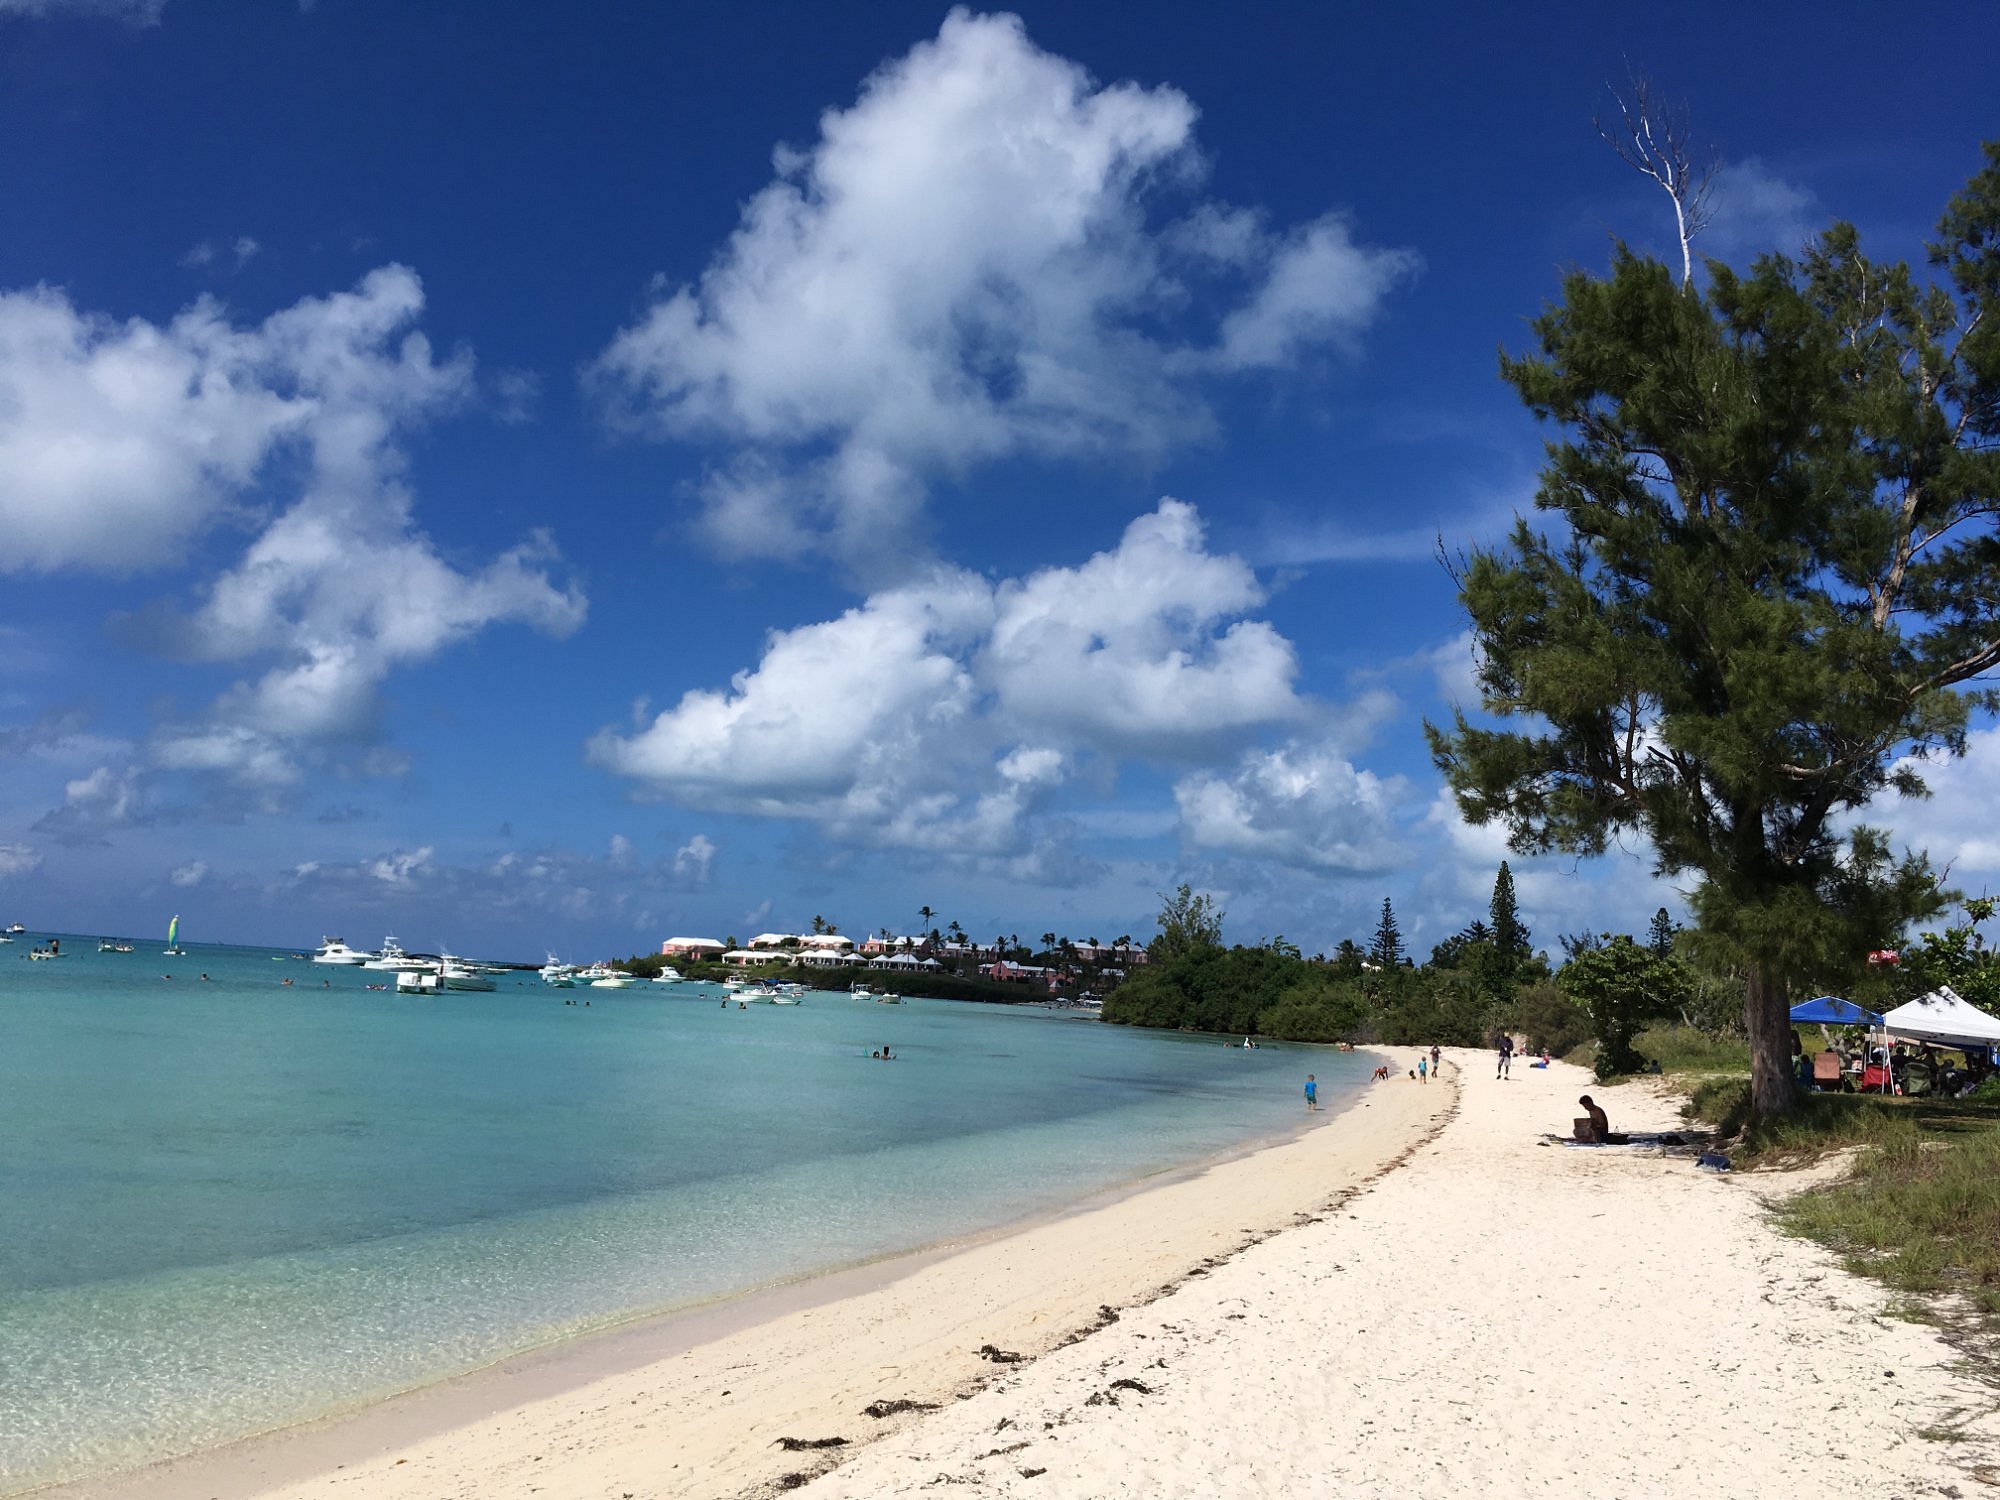 THE 15 BEST Things to Do in Bermuda - UPDATED 2022 | Tripadvisor